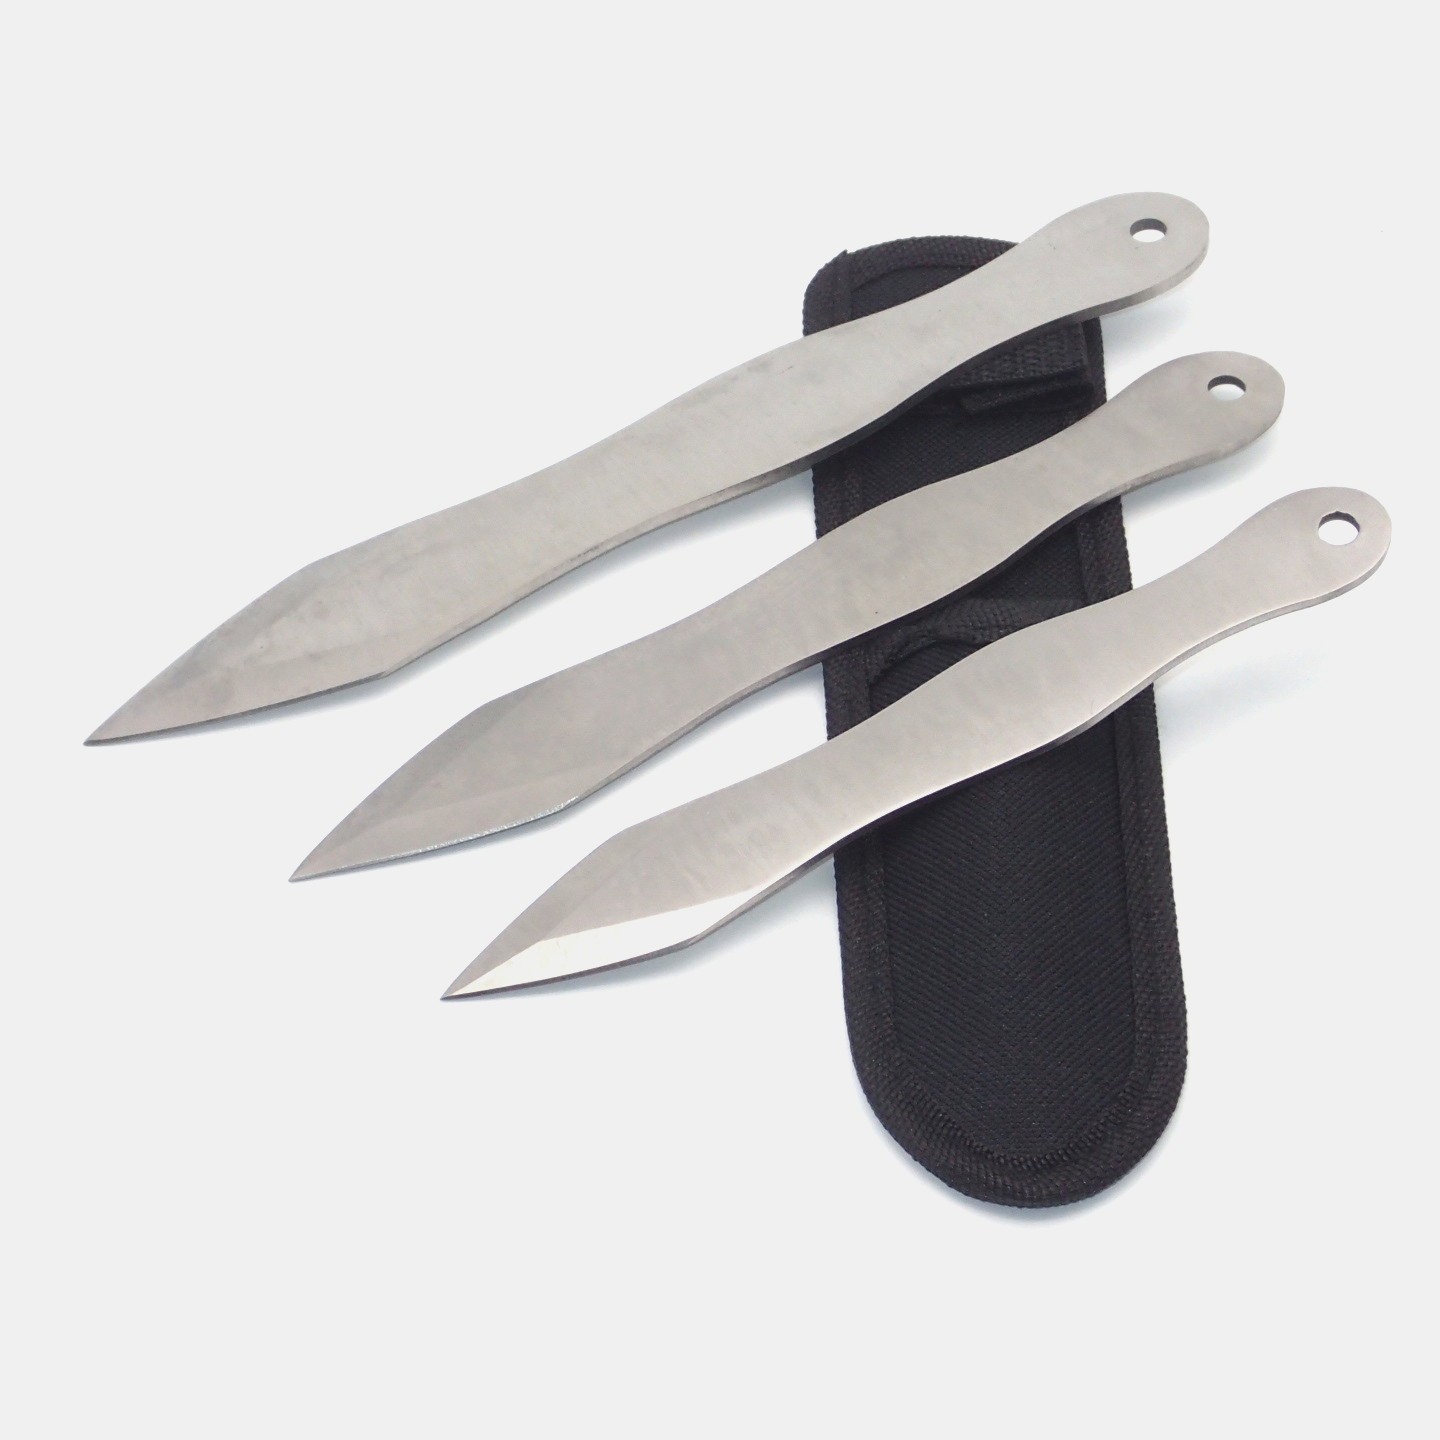 https://darkstreet.biz/9370/tk3-lanzar-cuchillos-super-set-3-pieces.jpg